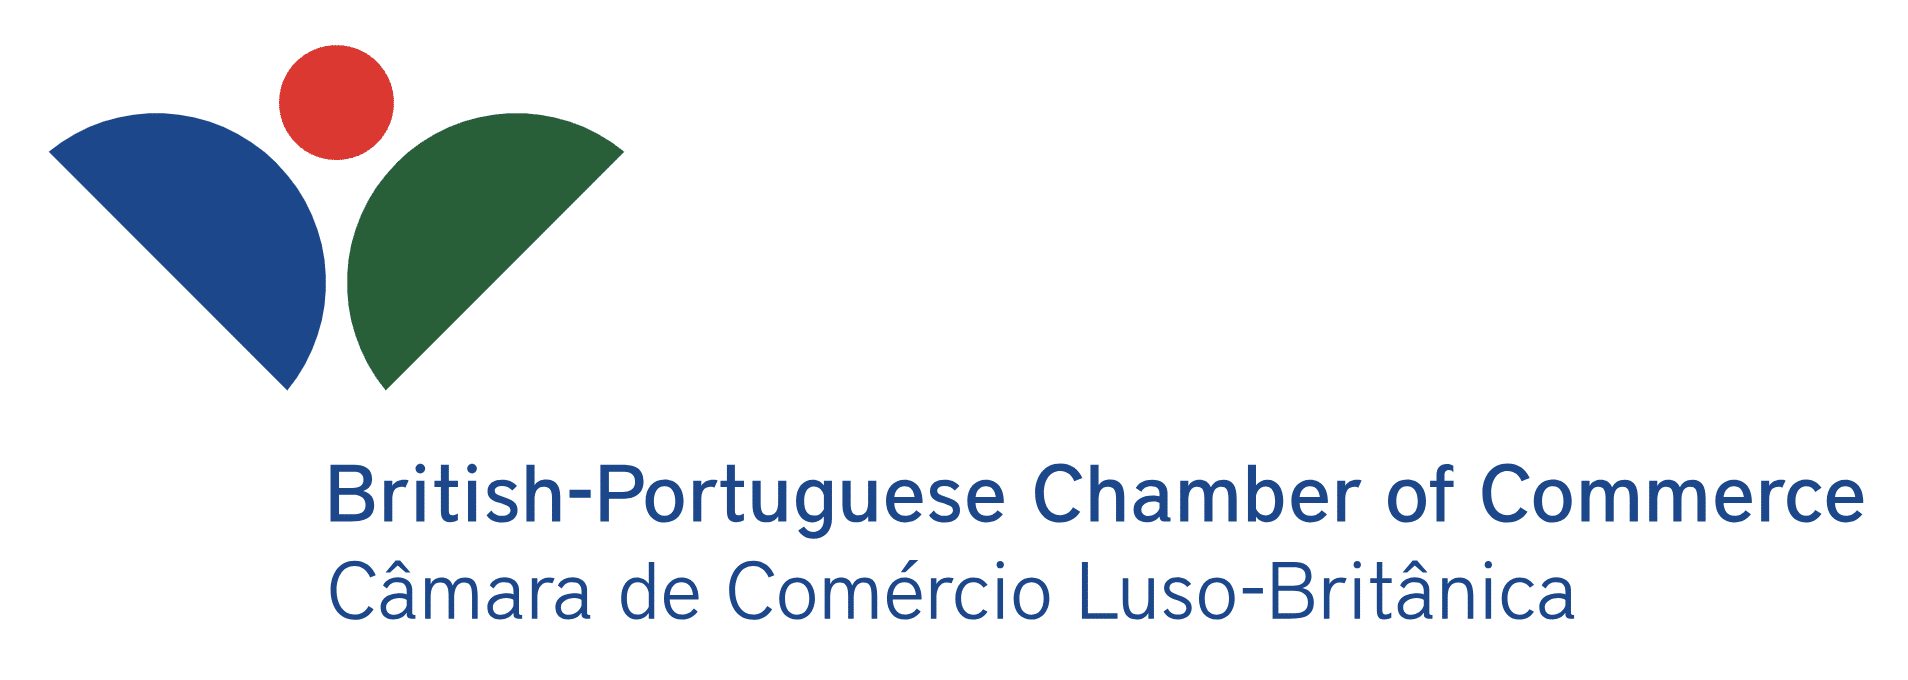 Camara de Comercio UK Portugal